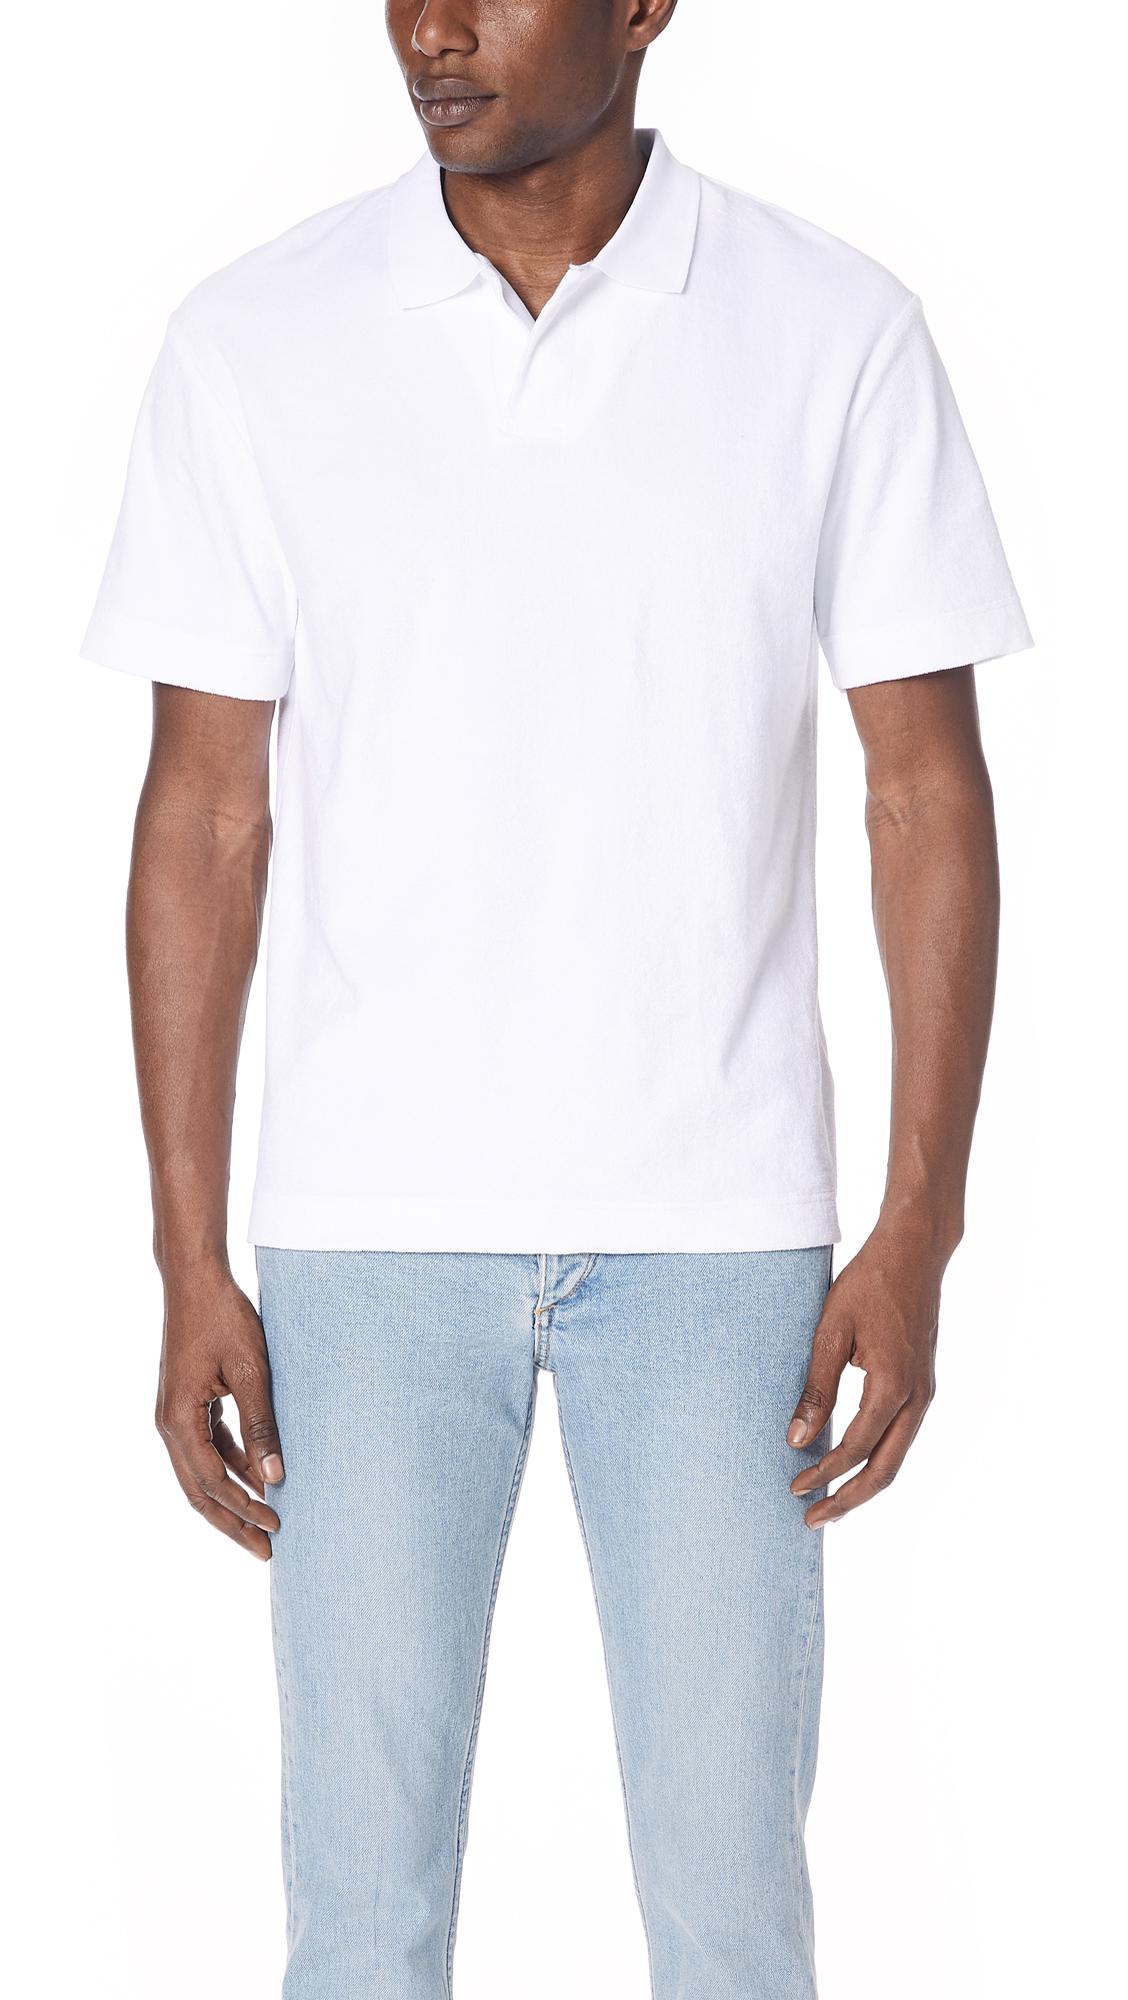 Sunspel Cotton Short Sleeve Terry Polo Shirt in White for Men - Lyst